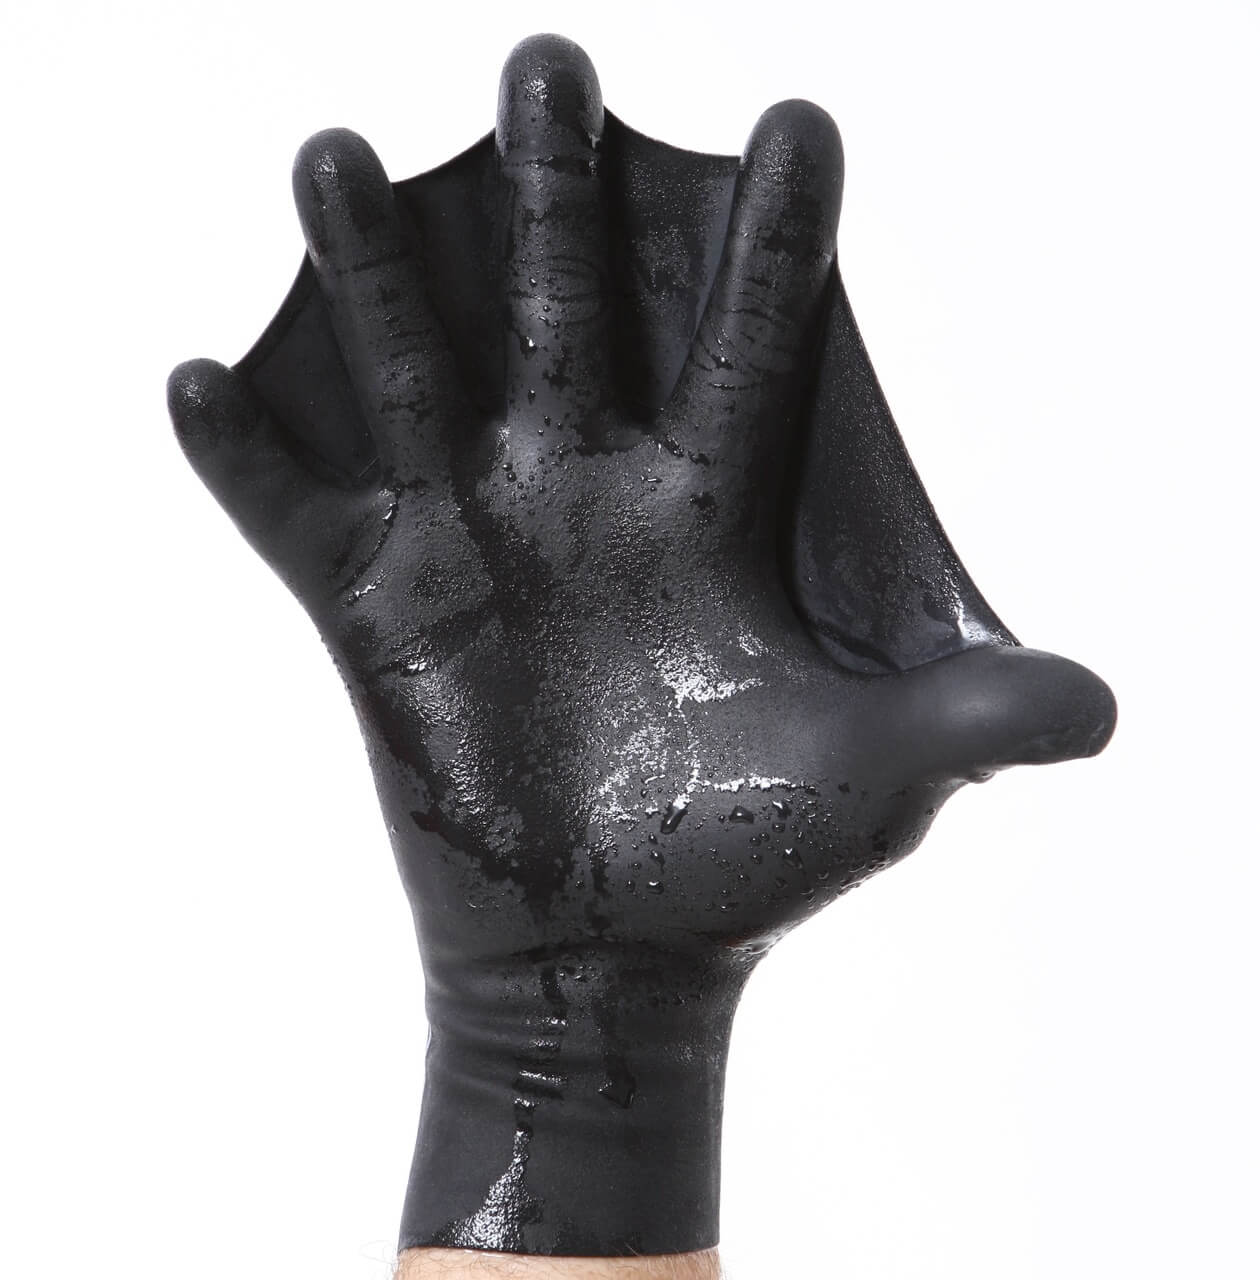 Darkfin Webbed Paddle Gloves For Surfing, Diving,, 60% OFF